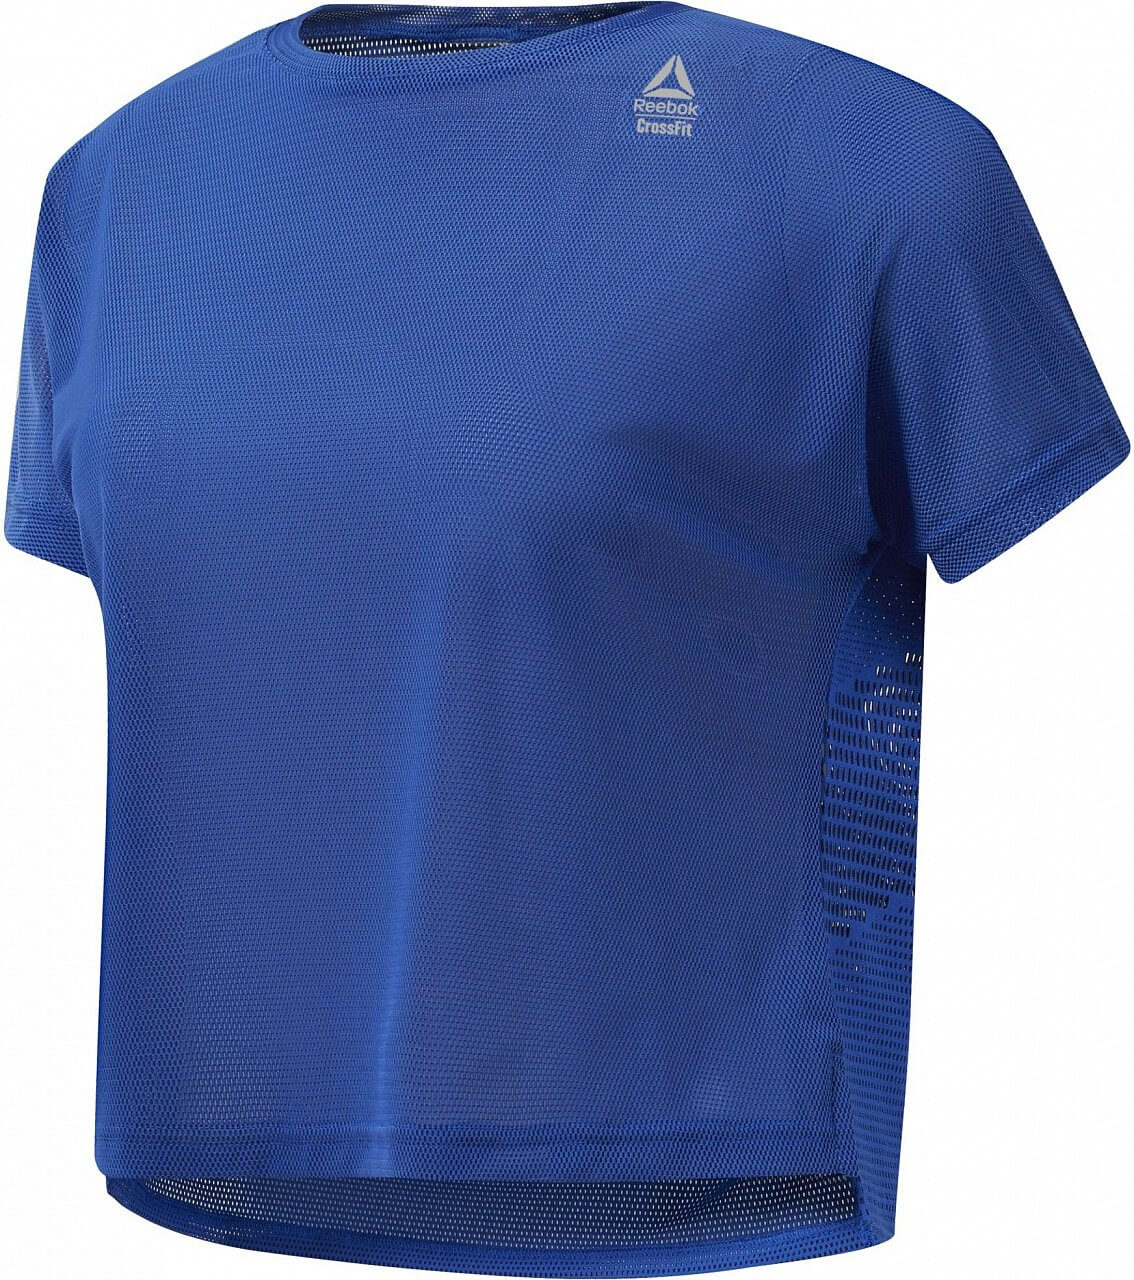 Dámske športové tričko Reebok CrossFit Jacquard Tee